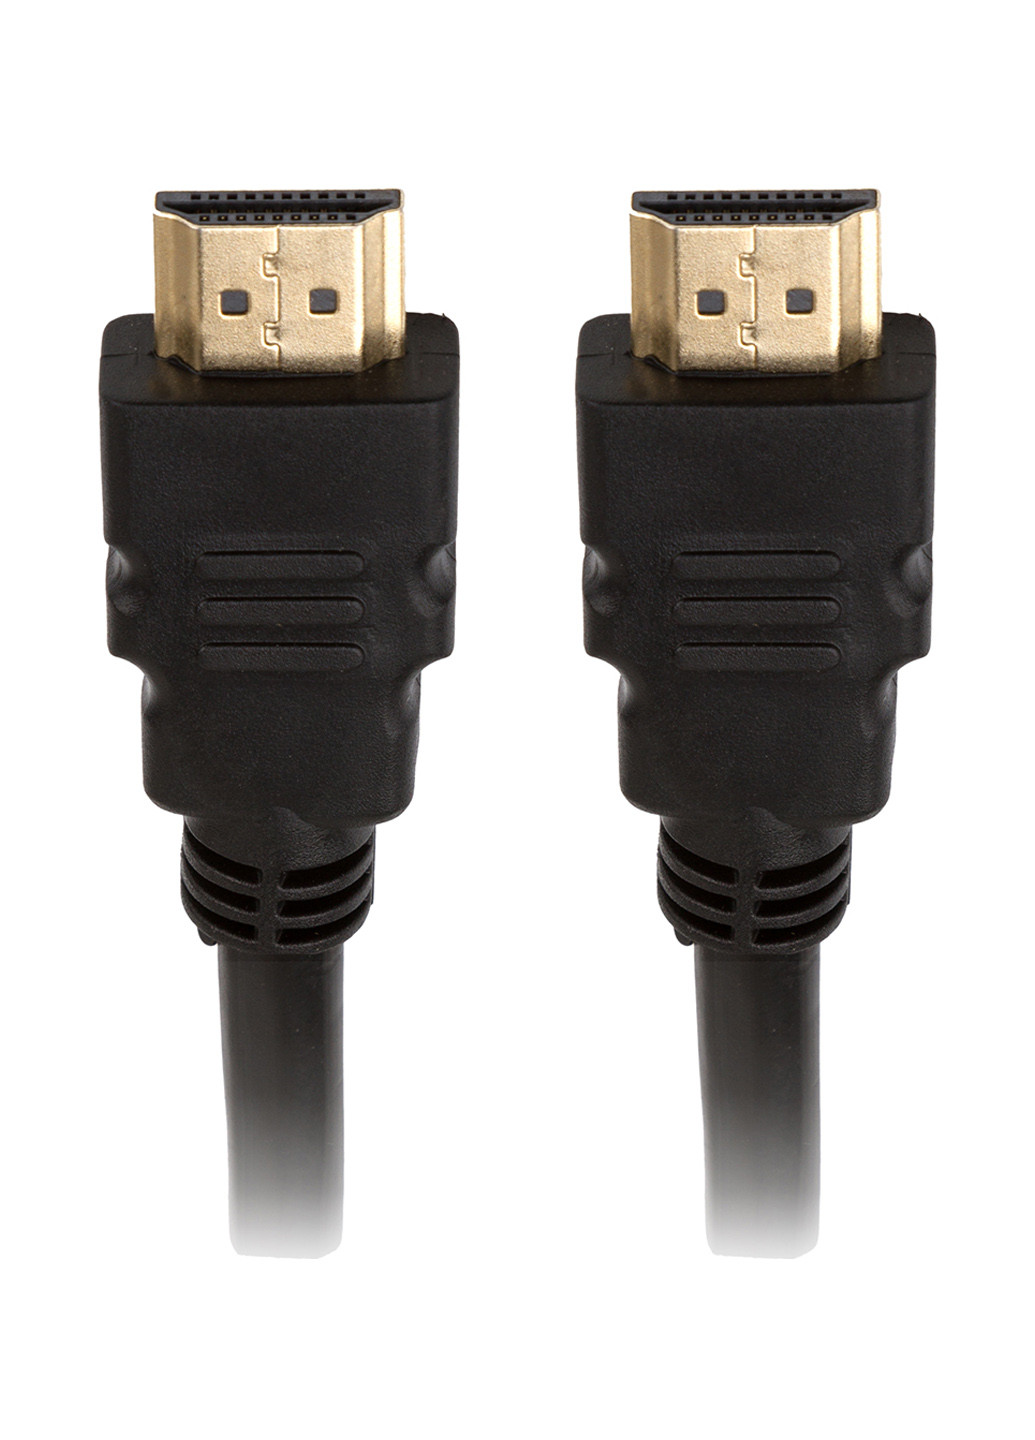 Кабель HDMI 1.4 v, 1,5 м (10015) CHARMOUNT кабель charmount hdmi 1.4 v, 1,5 м (10015) (145607405)